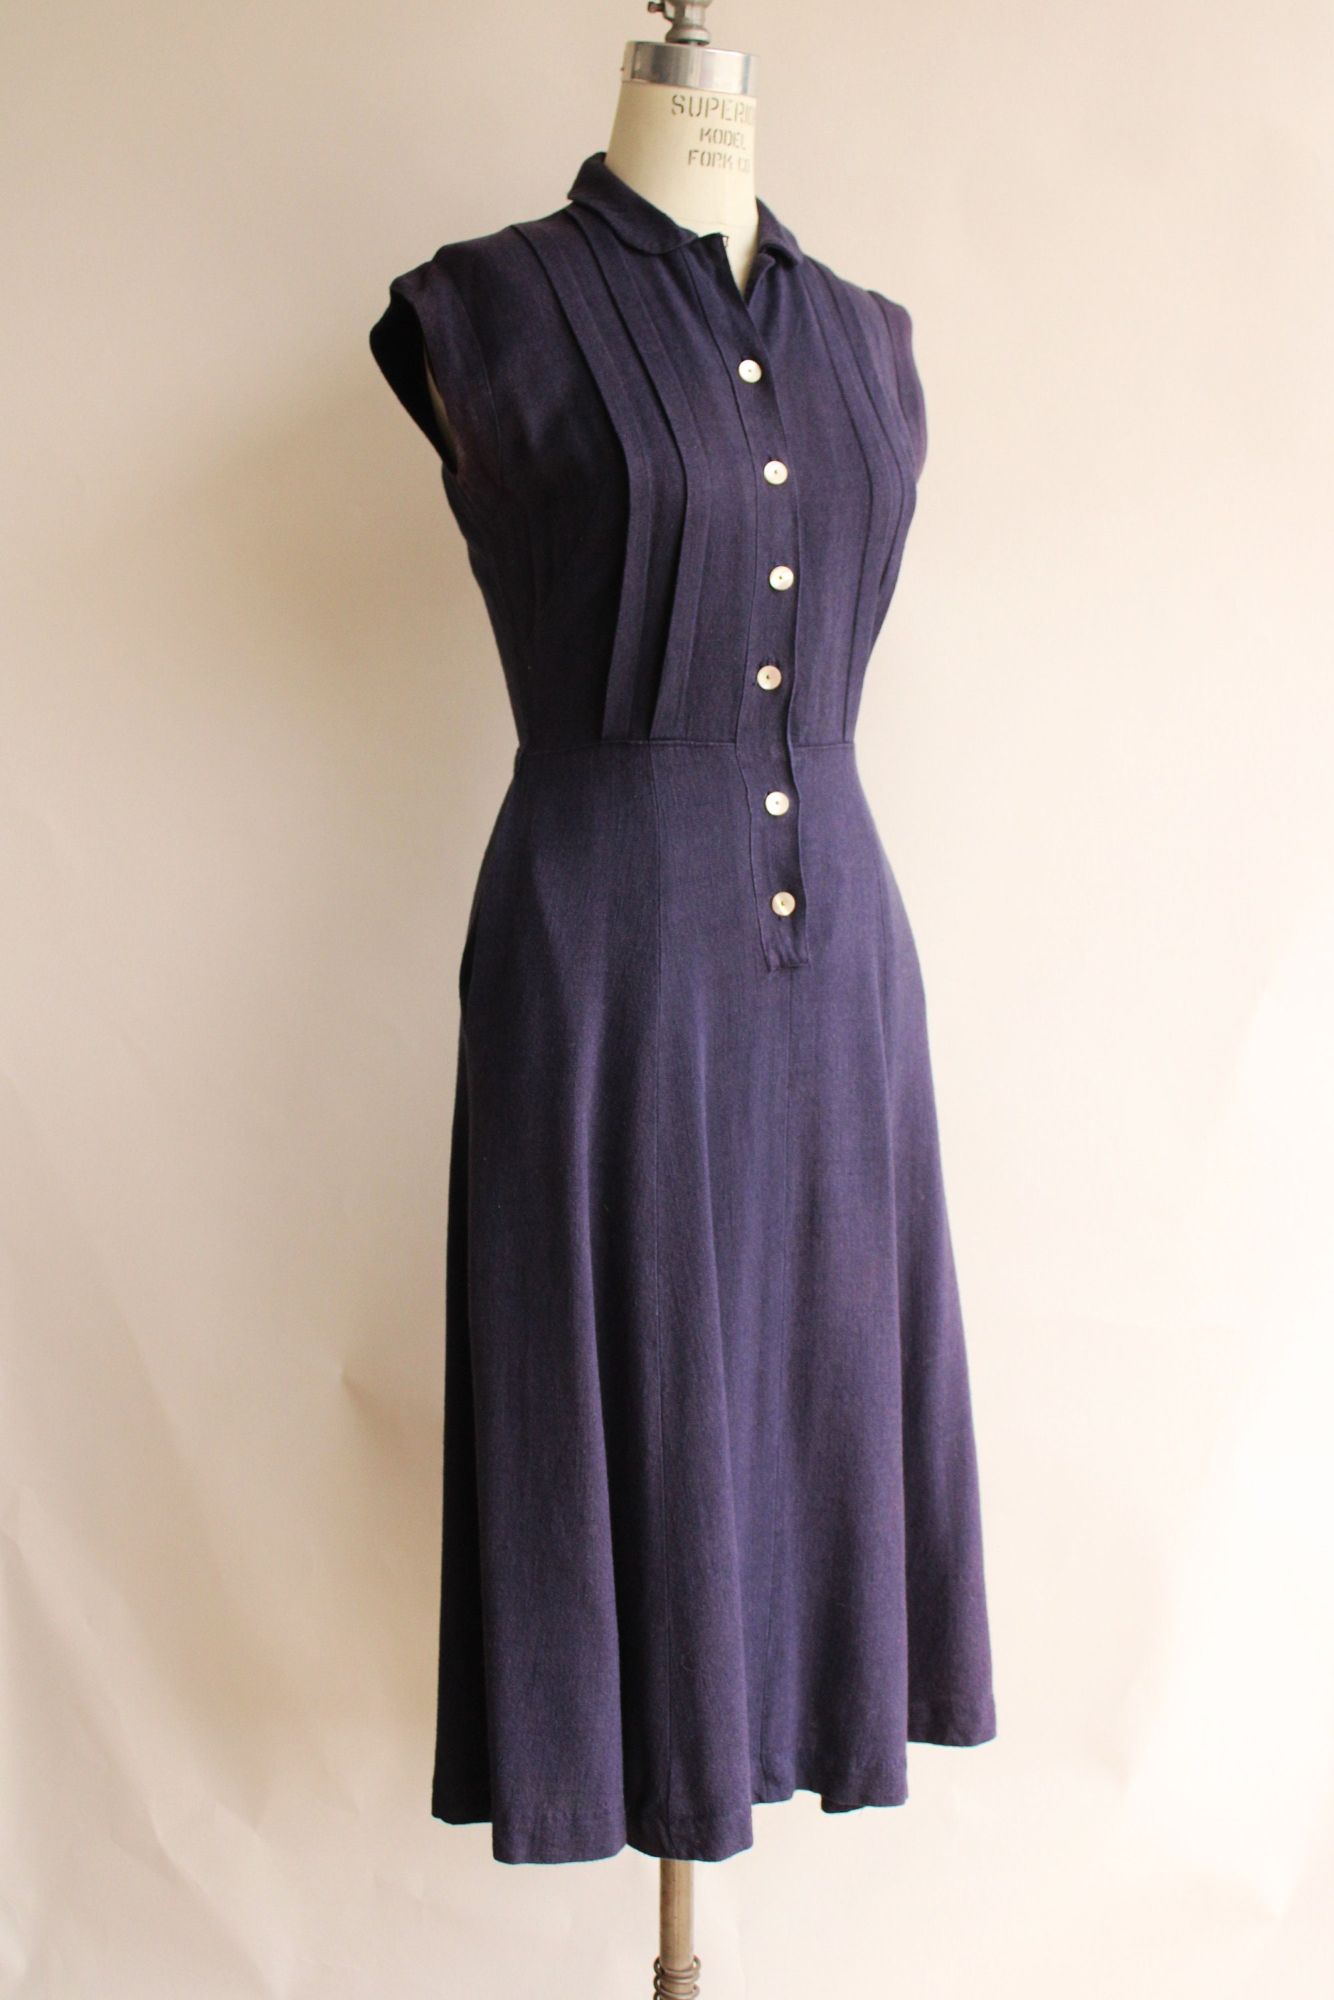 Vintage 1940s 1950s Navy Blue Shirtwaist Dress with Pockets